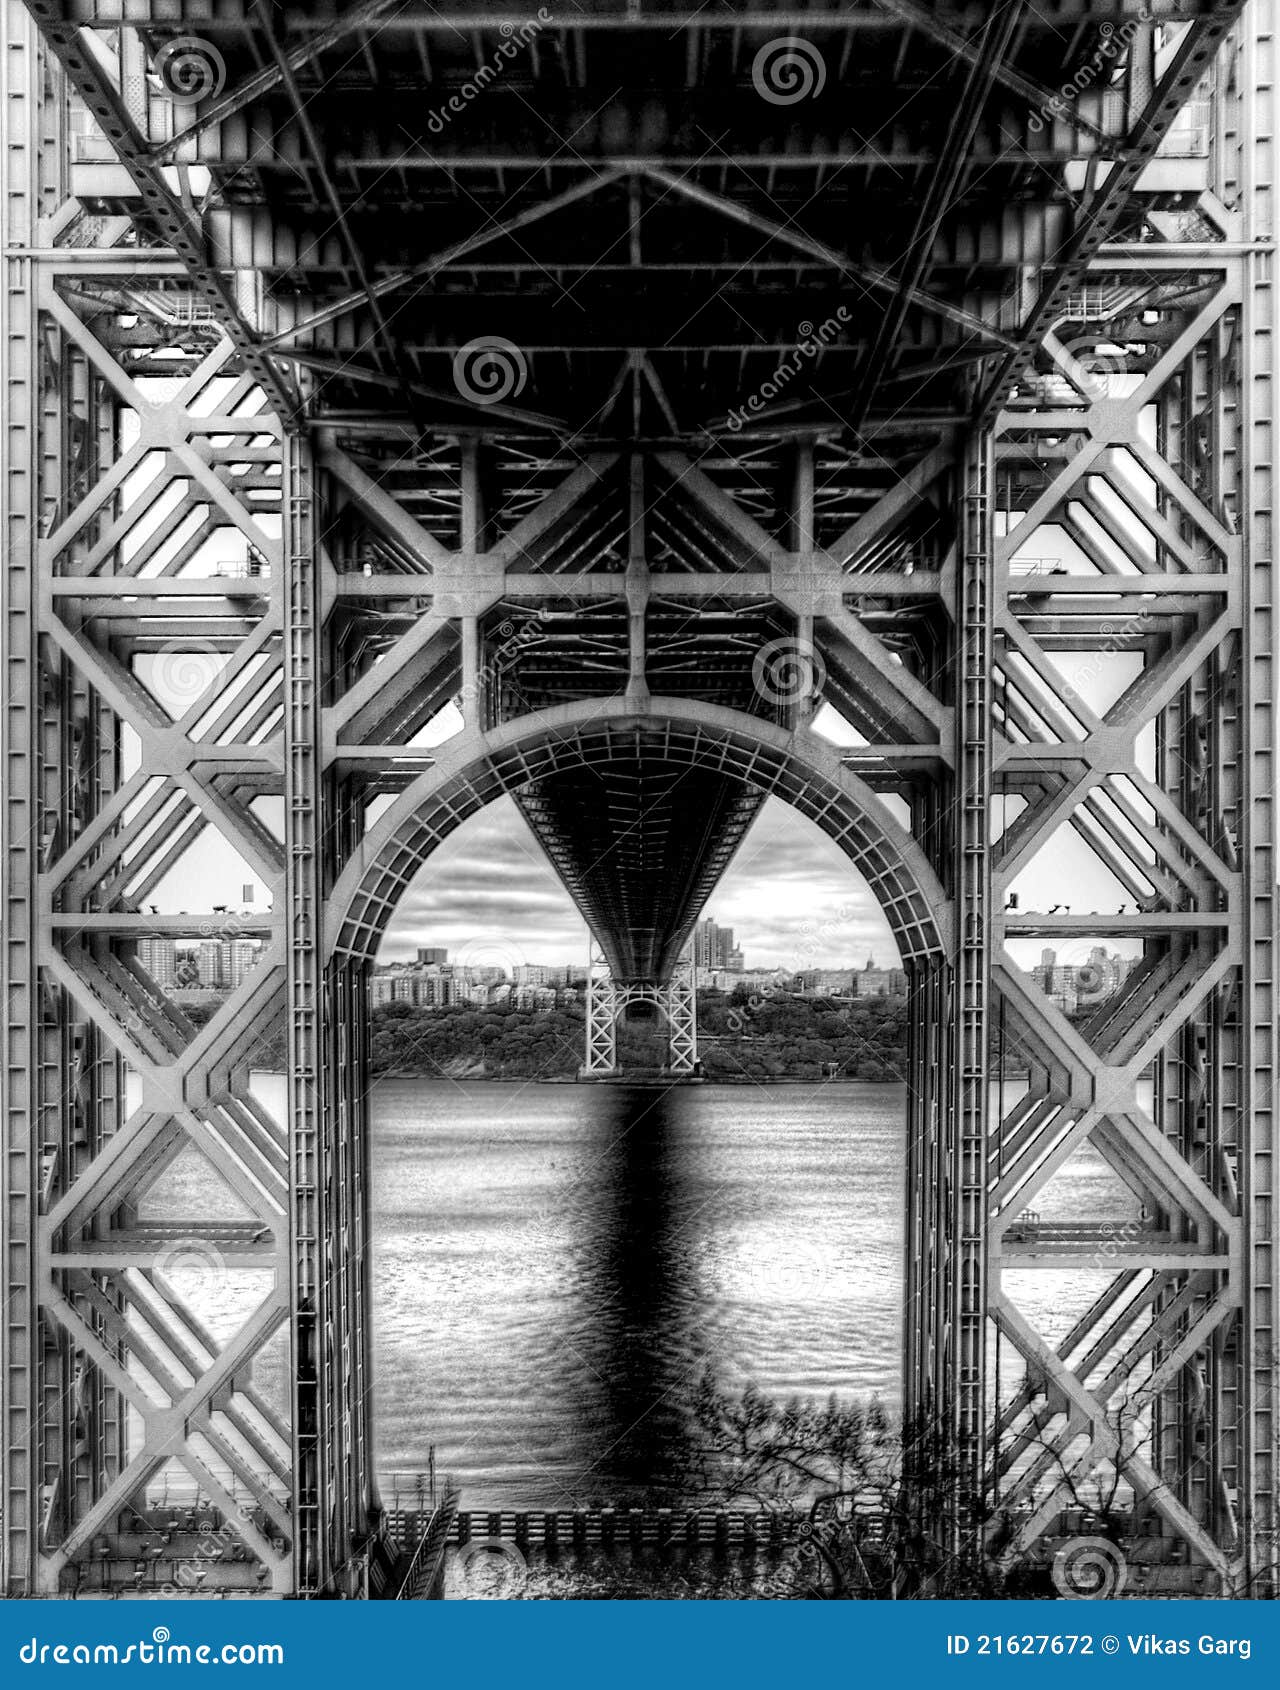 george washington bridge unique perspective